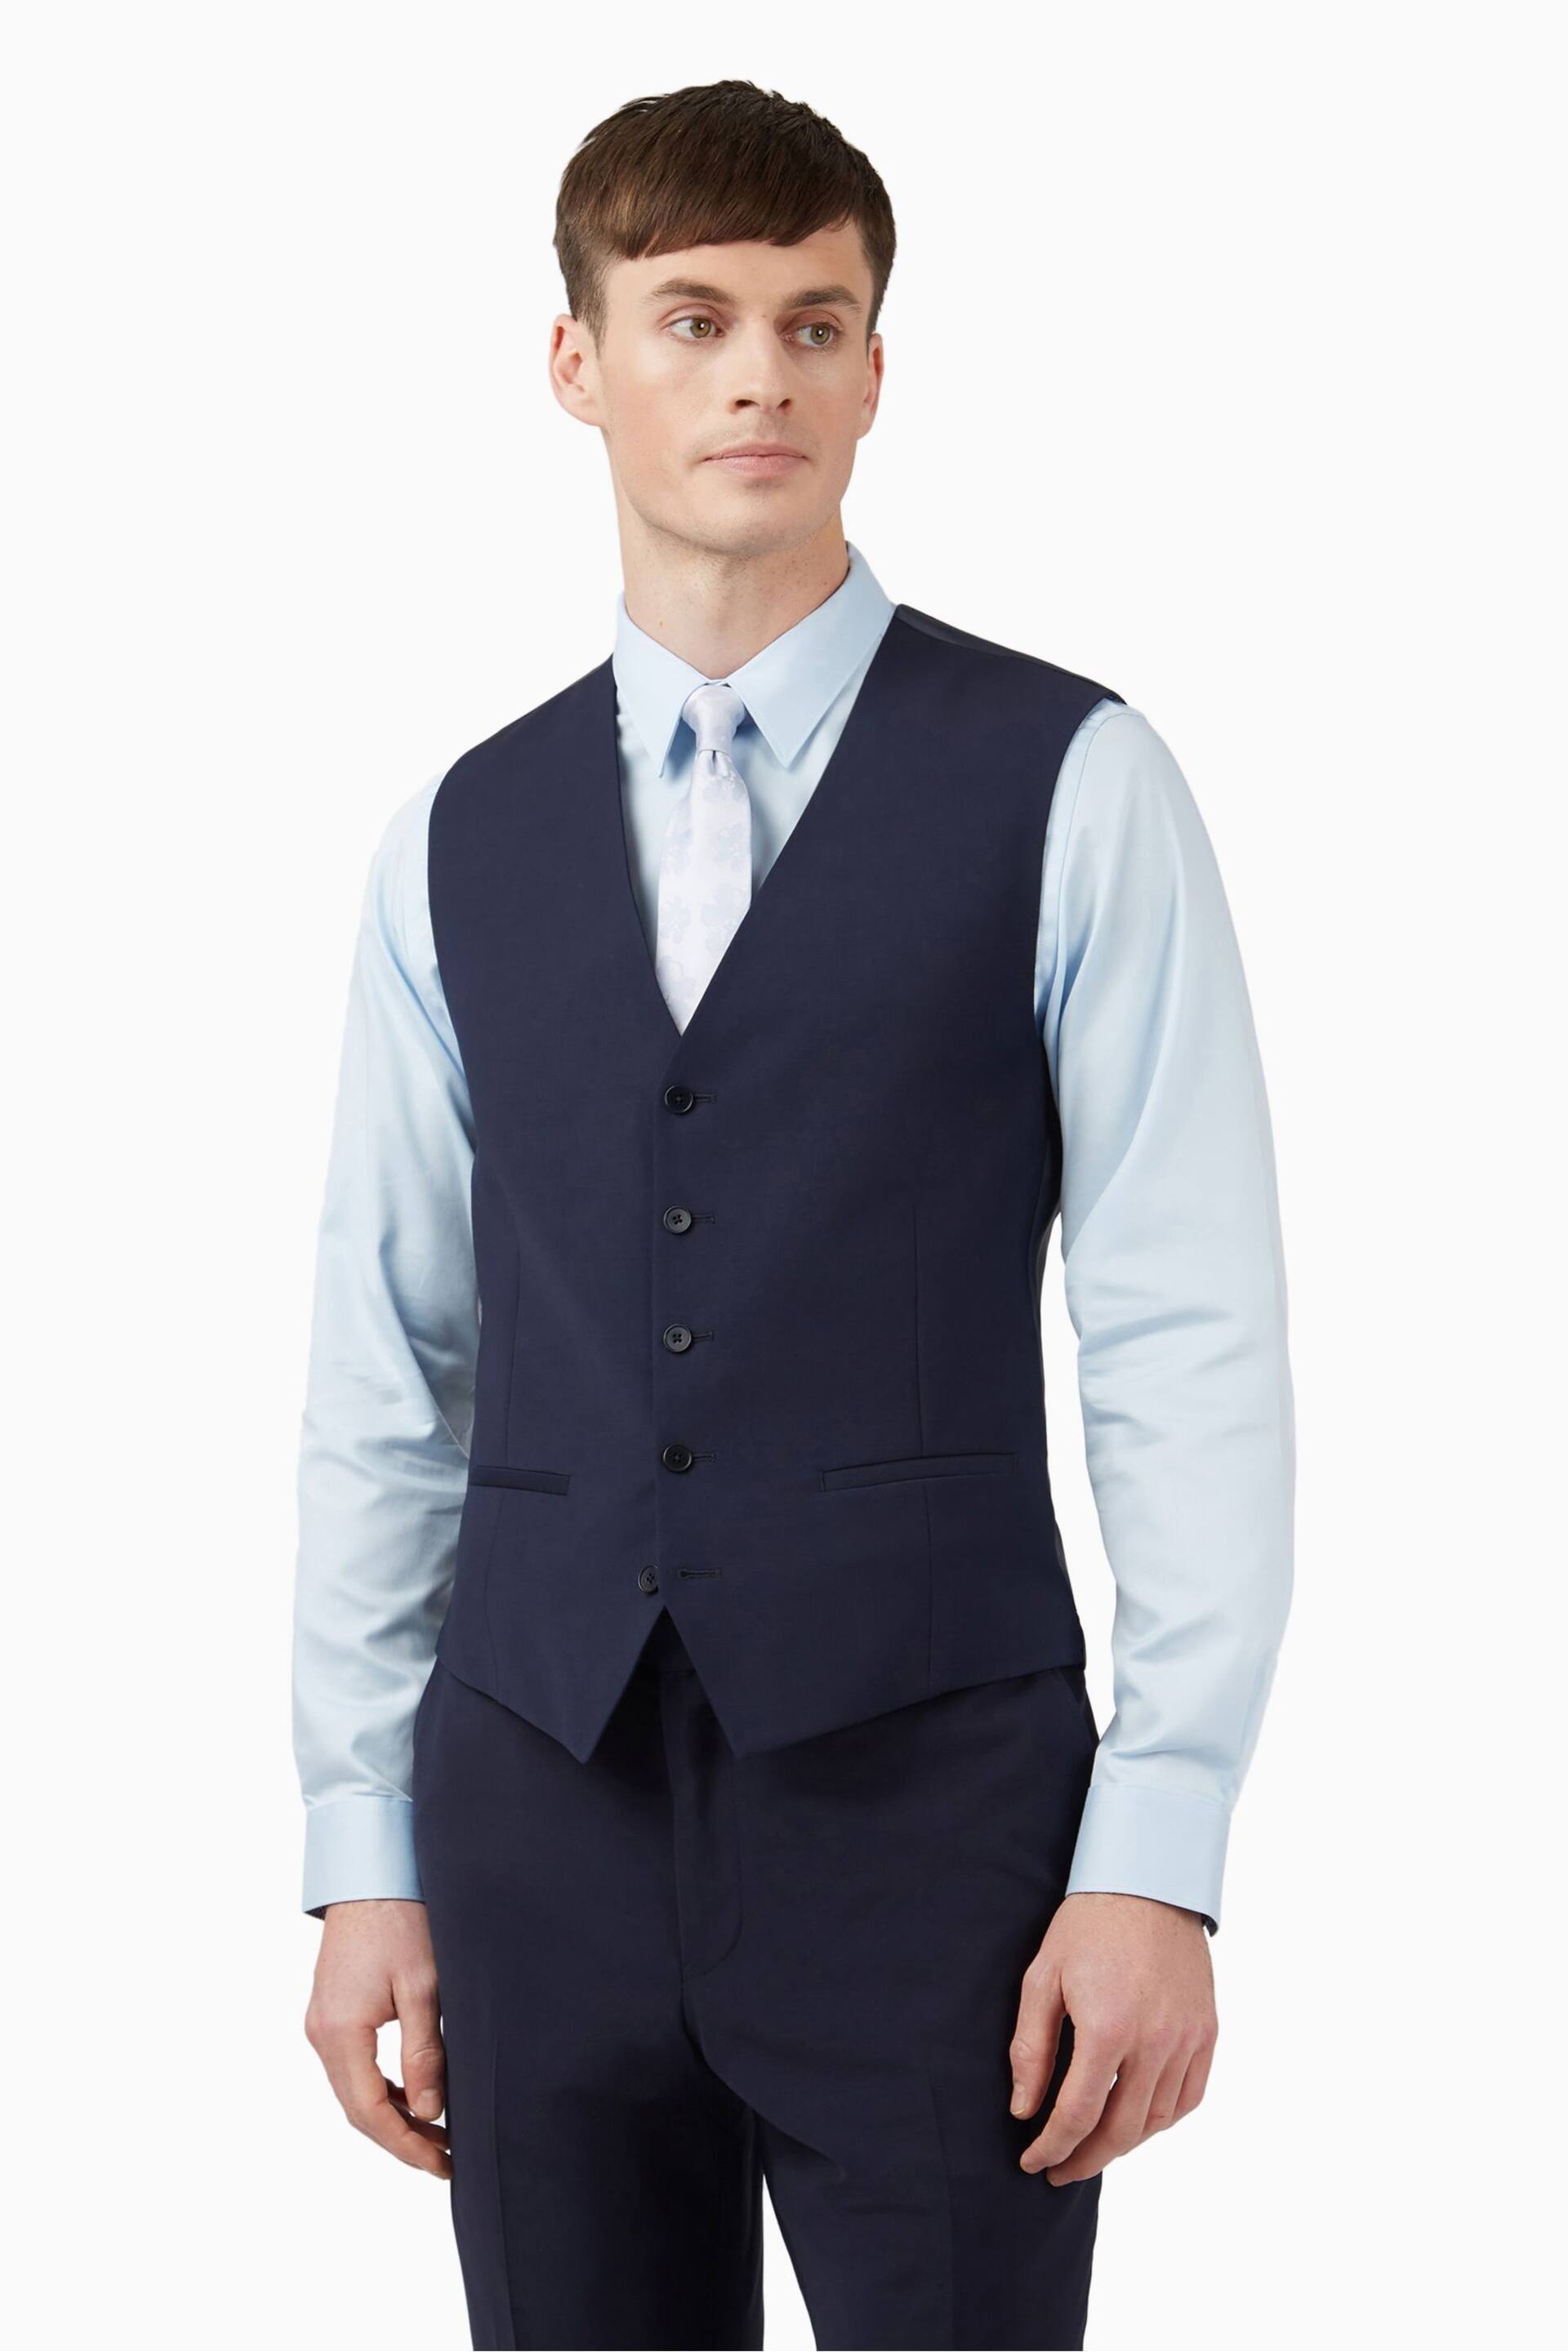 Ted Baker Navy Blue Premium Panama Suit Waistcoat - Image 1 of 4